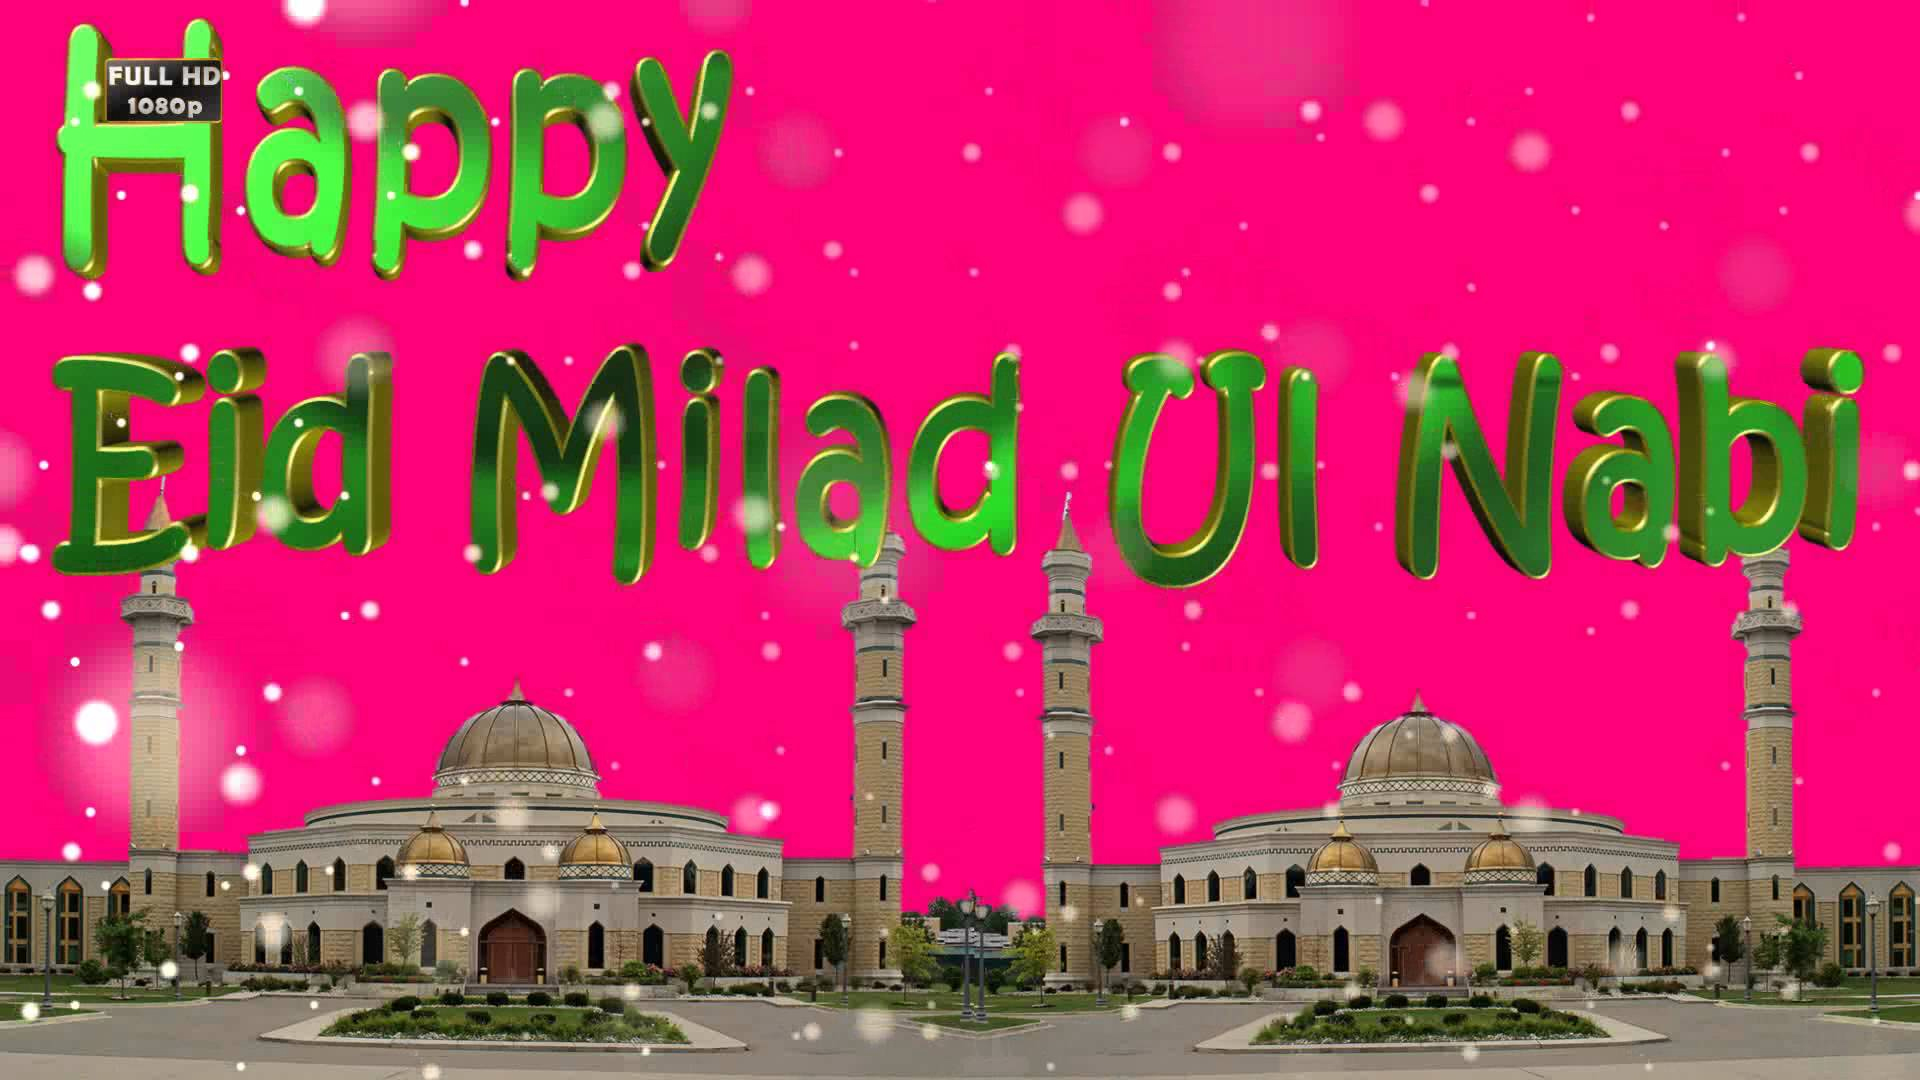 Eid Milad Un Nabi Mubarak Images - Eid Milad Un Nabi Images 2015 , HD Wallpaper & Backgrounds